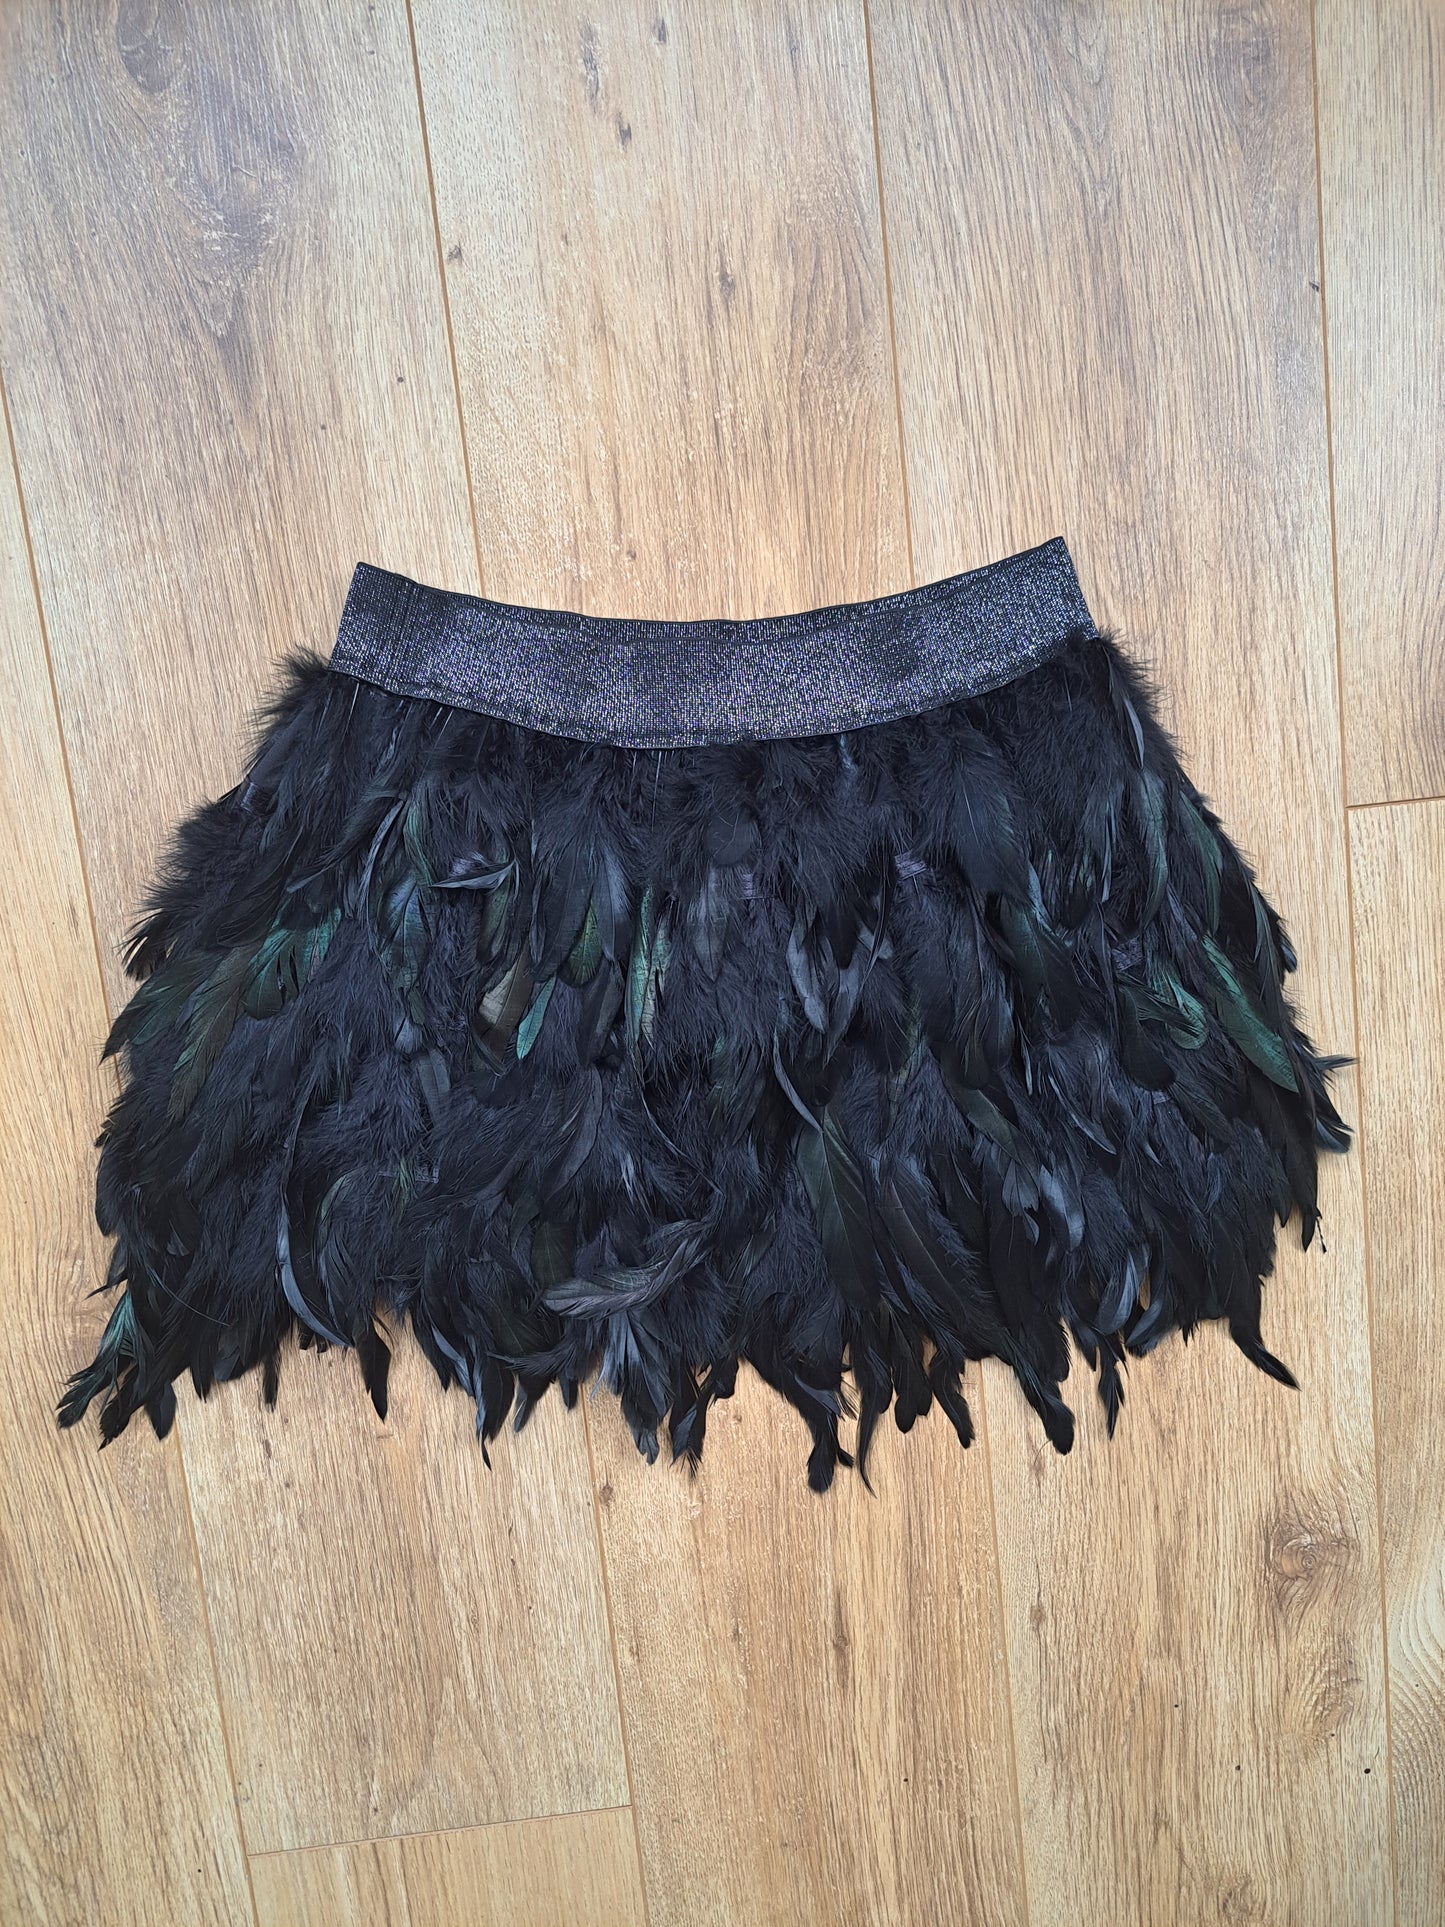 Black Feather Top & Skirt Set